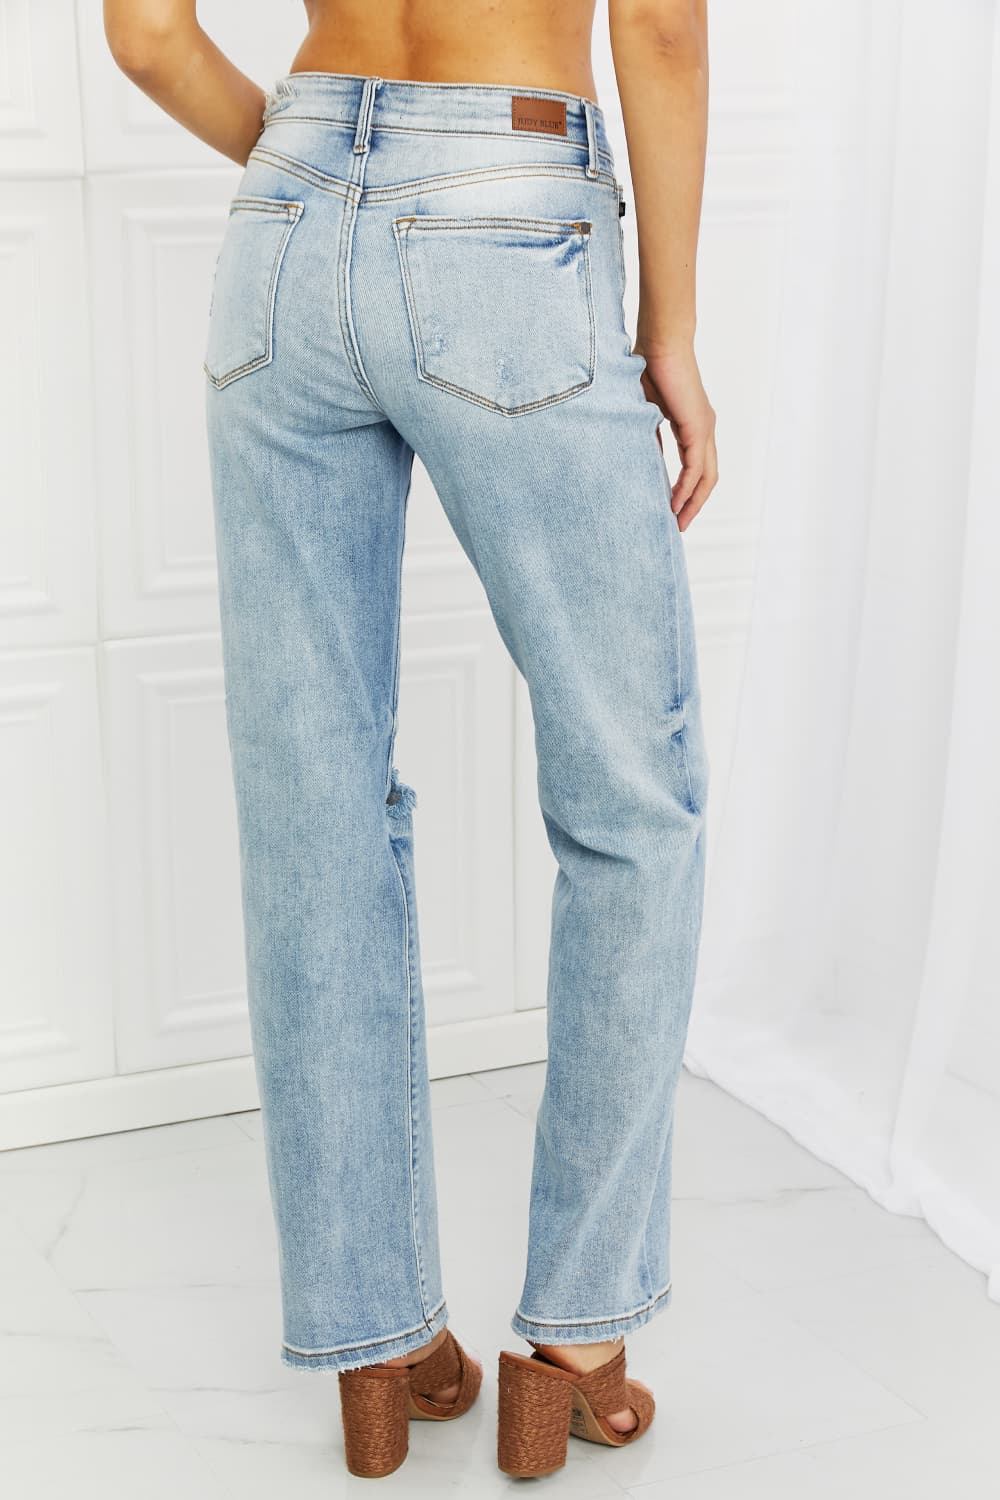 Judy Blue Natalie Full Size Distressed Straight Leg Jeans - The Fashion Unicorn